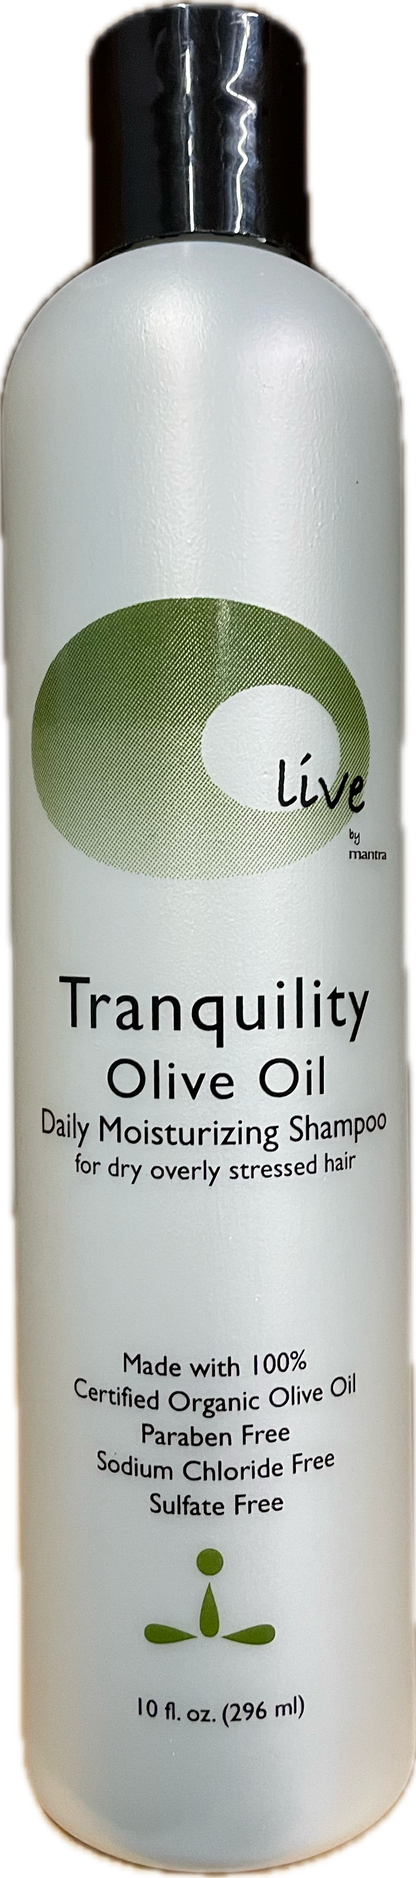 Tranquility moisture shampoo PROMO - Buy 4 Get 2 Free